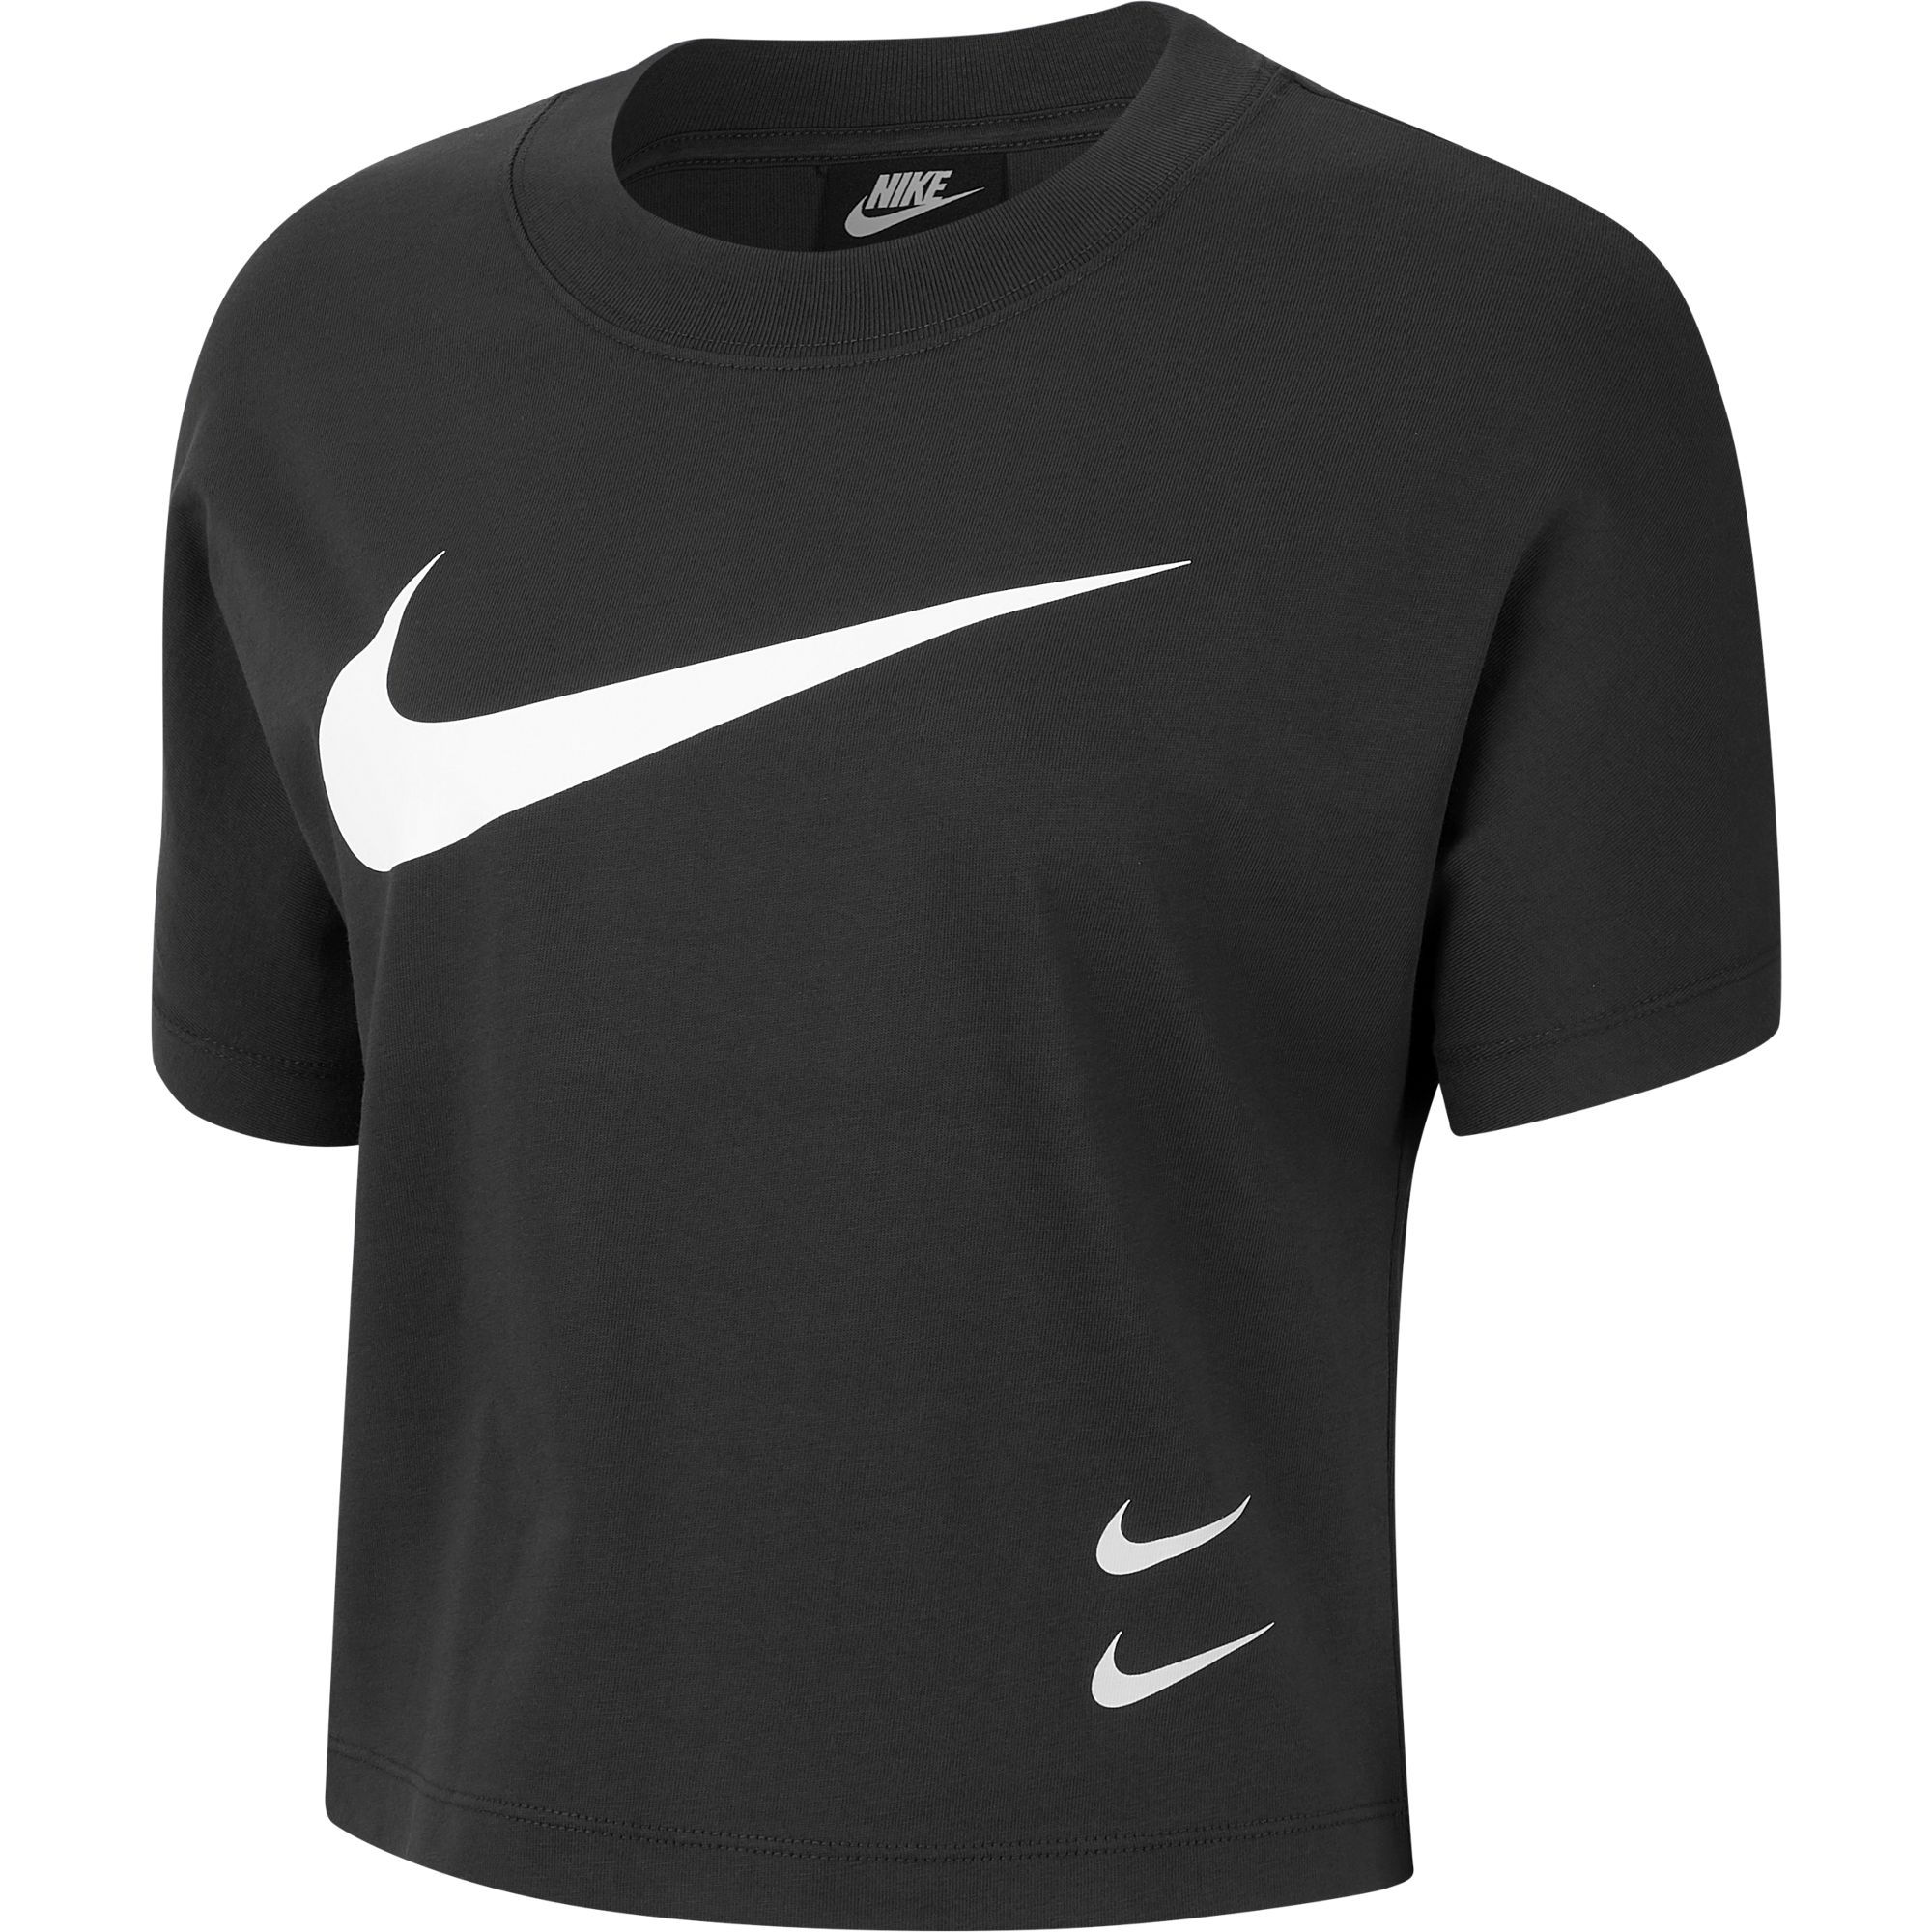 Женская футболка Nike Sportswear 